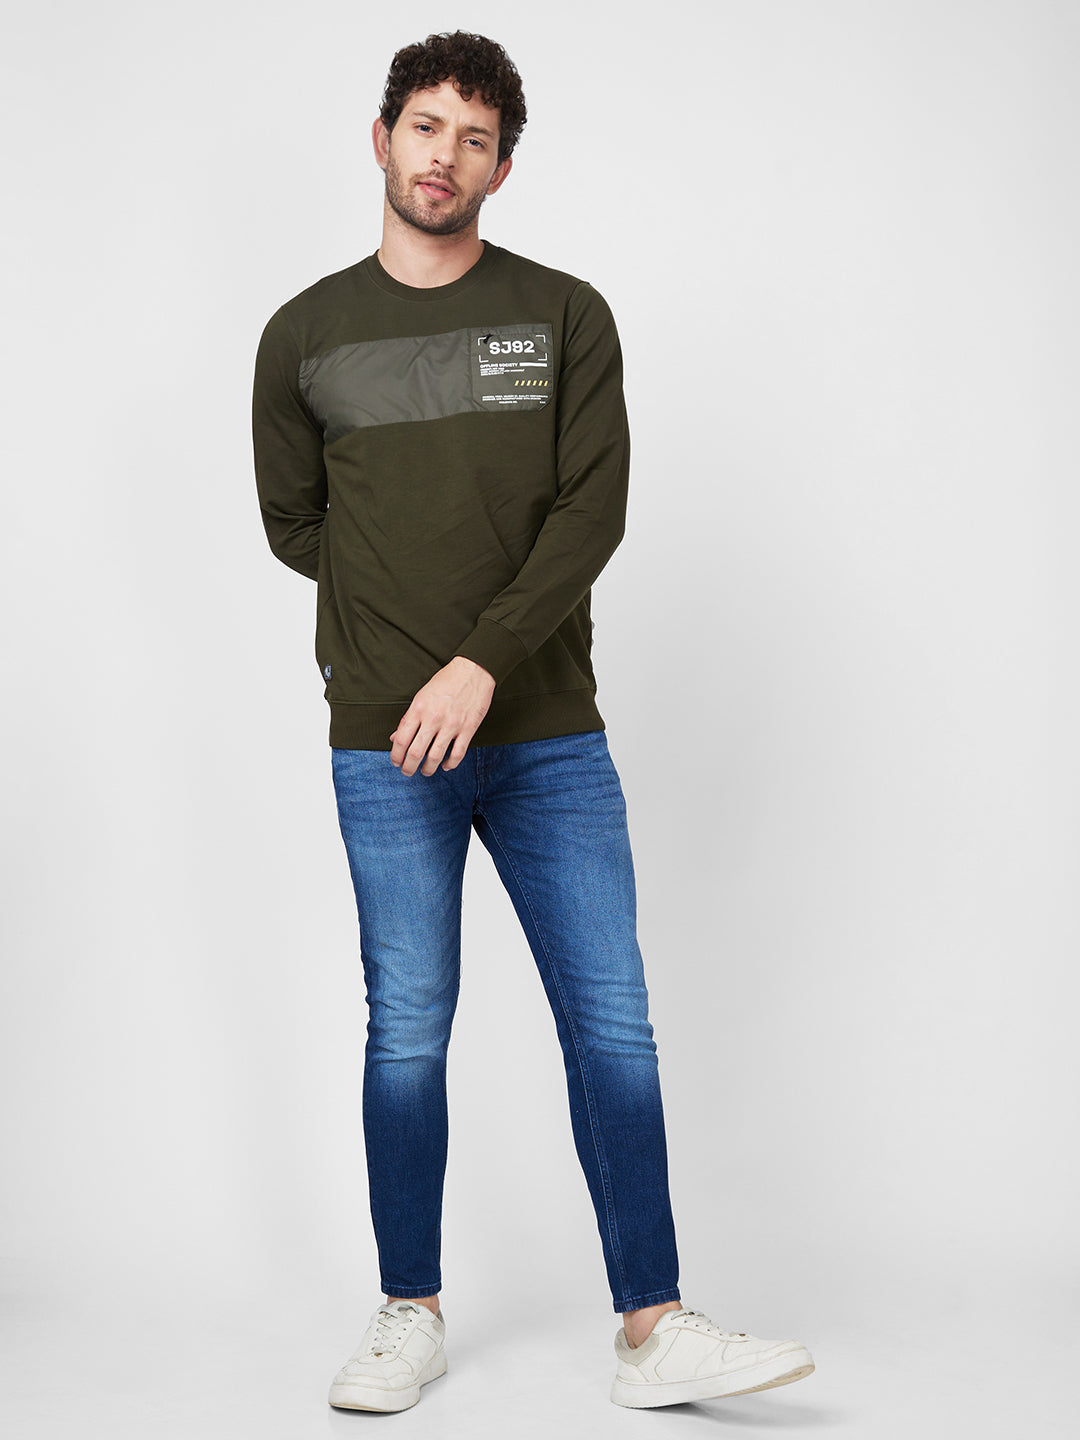 Spykar Slim Fit Round Neck Full Sleeve Green Sweatshirt For Men